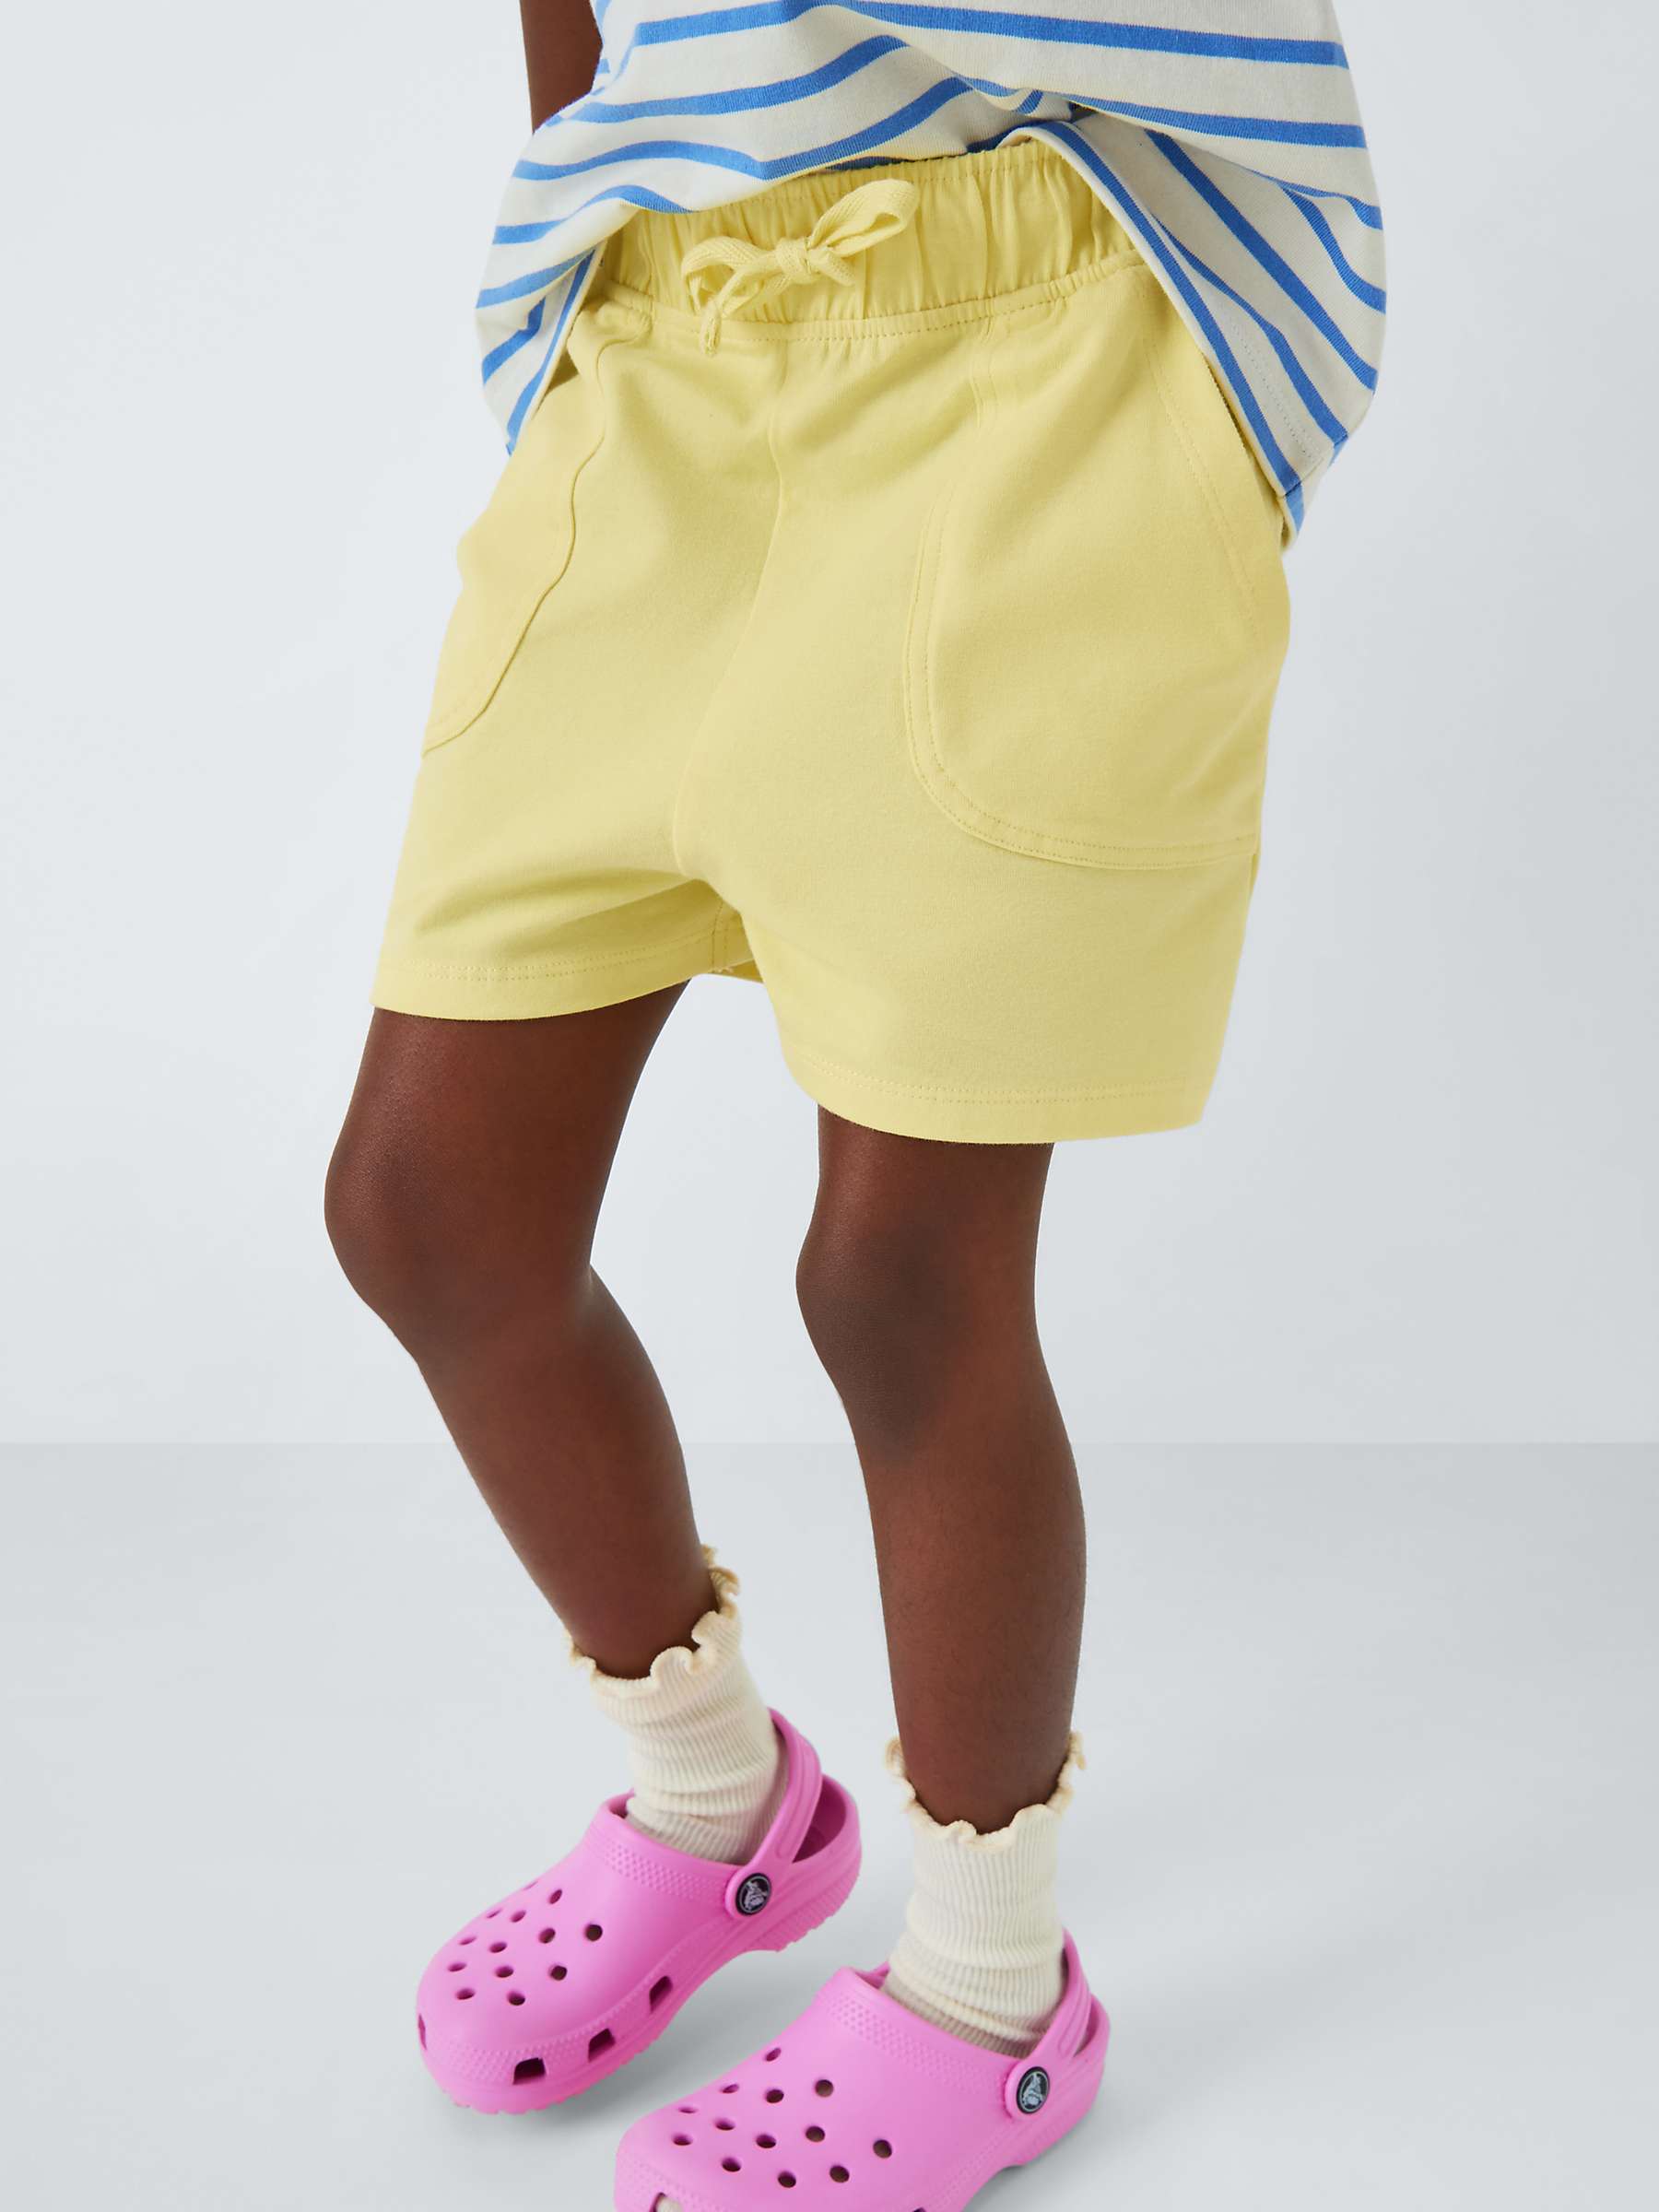 Buy John Lewis Kids' Jersey Plain/Floral Shorts, Pack of 2, Yellow Online at johnlewis.com